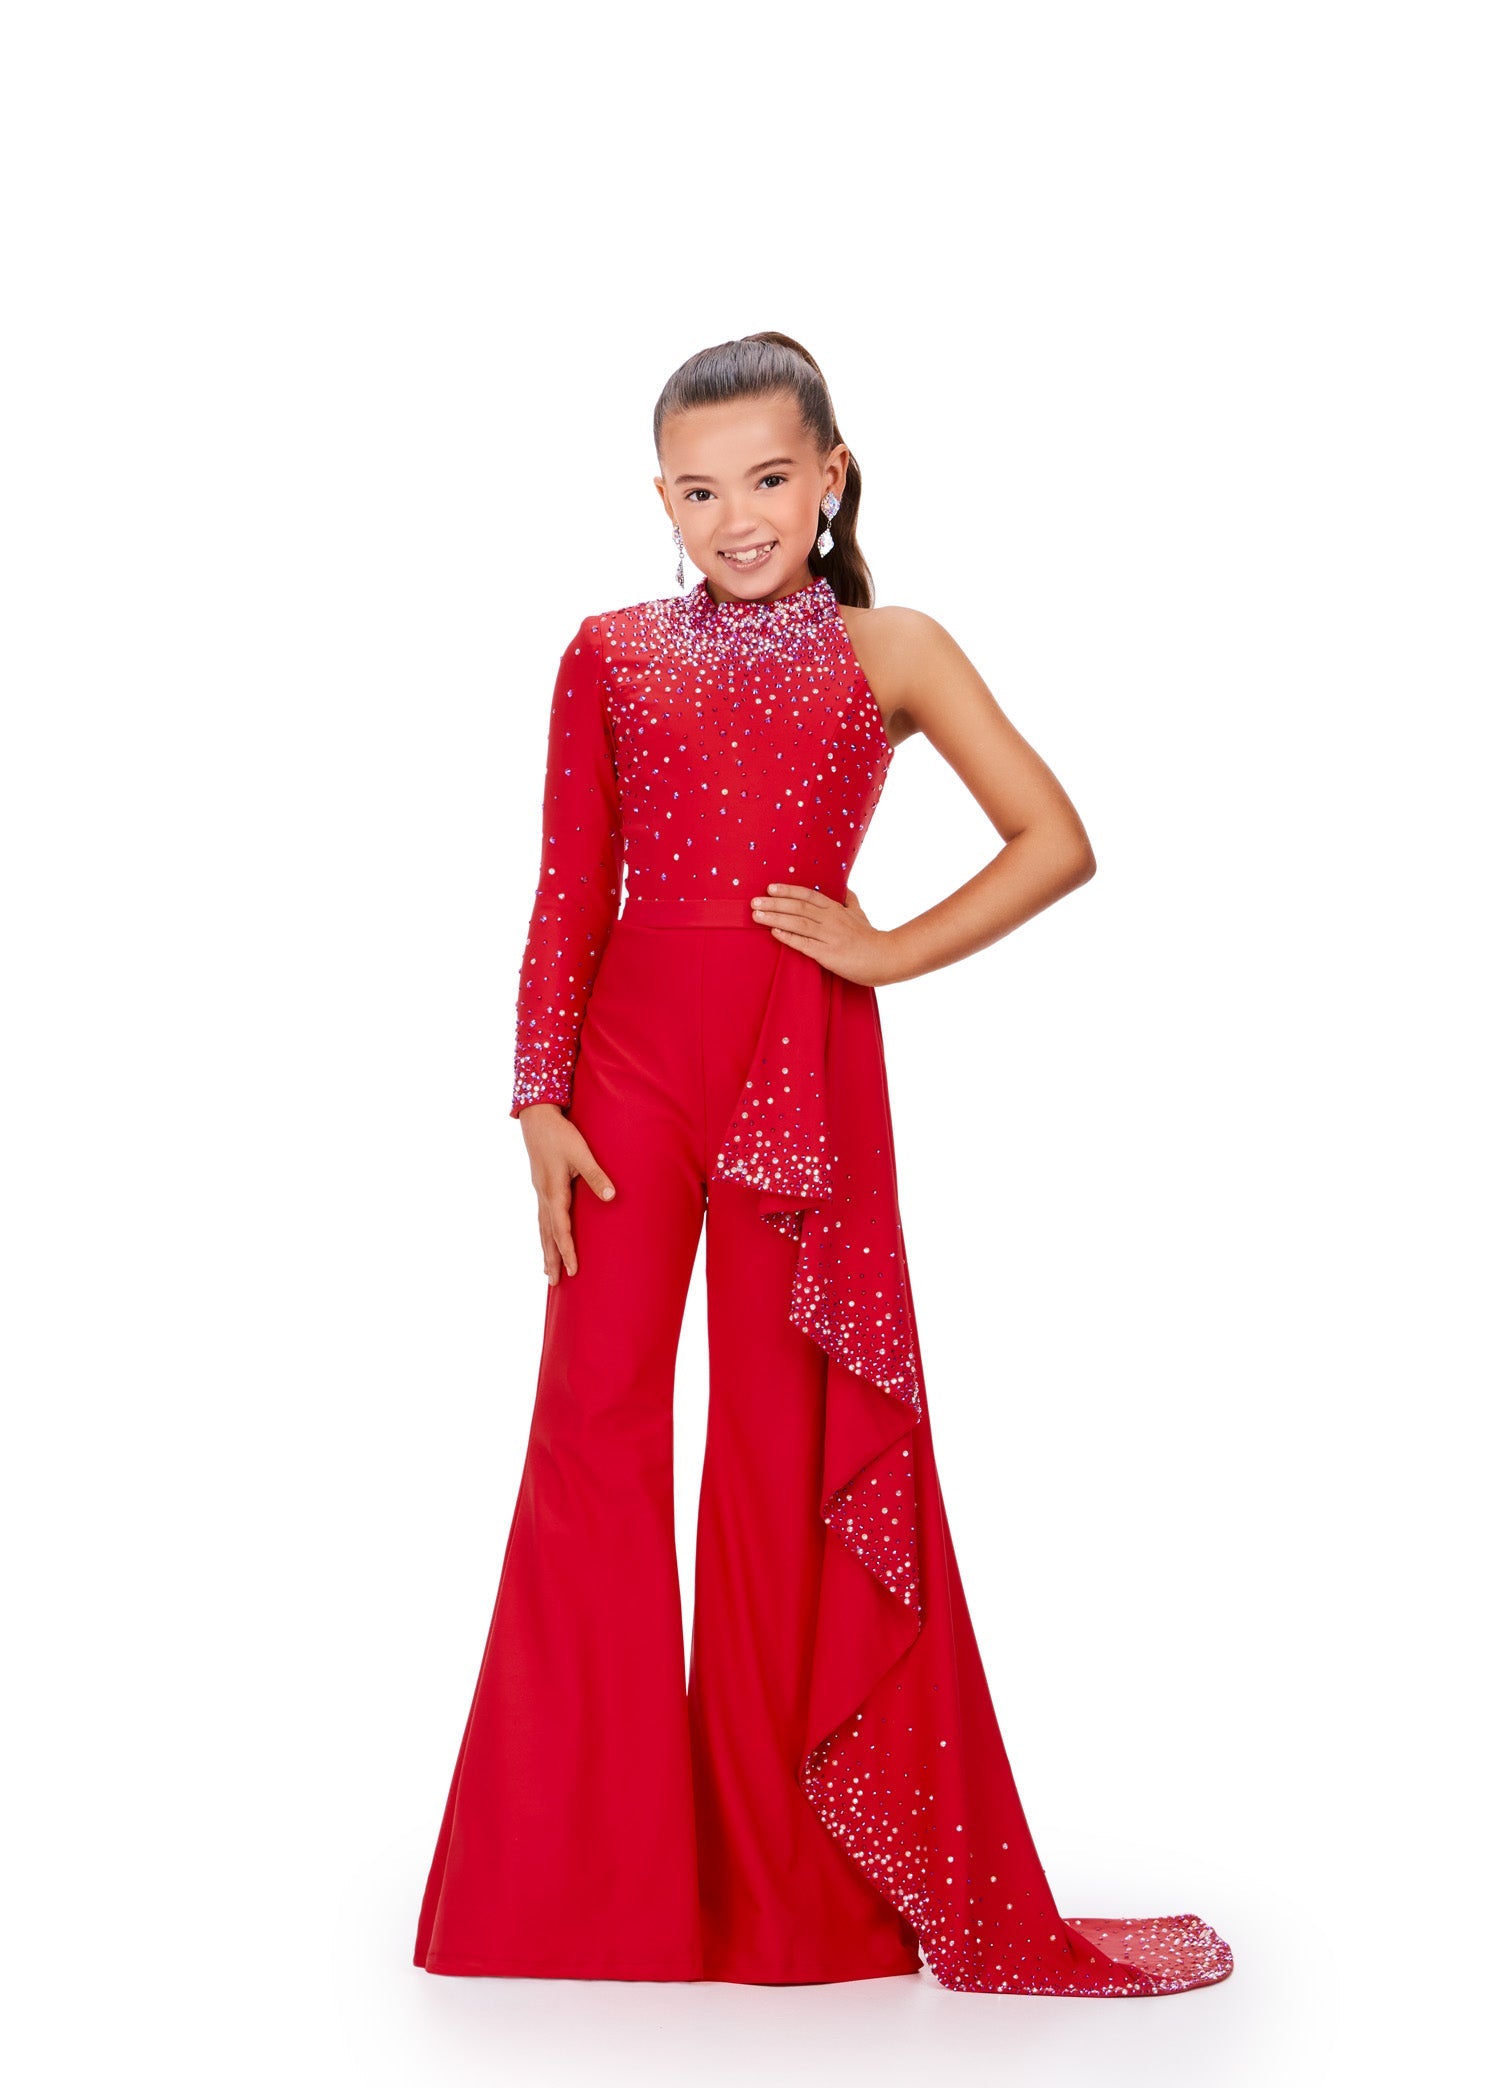 Ashley Lauren Kids 8253 Size 8 Red Girls Pageant Jumpsuit Ruffle